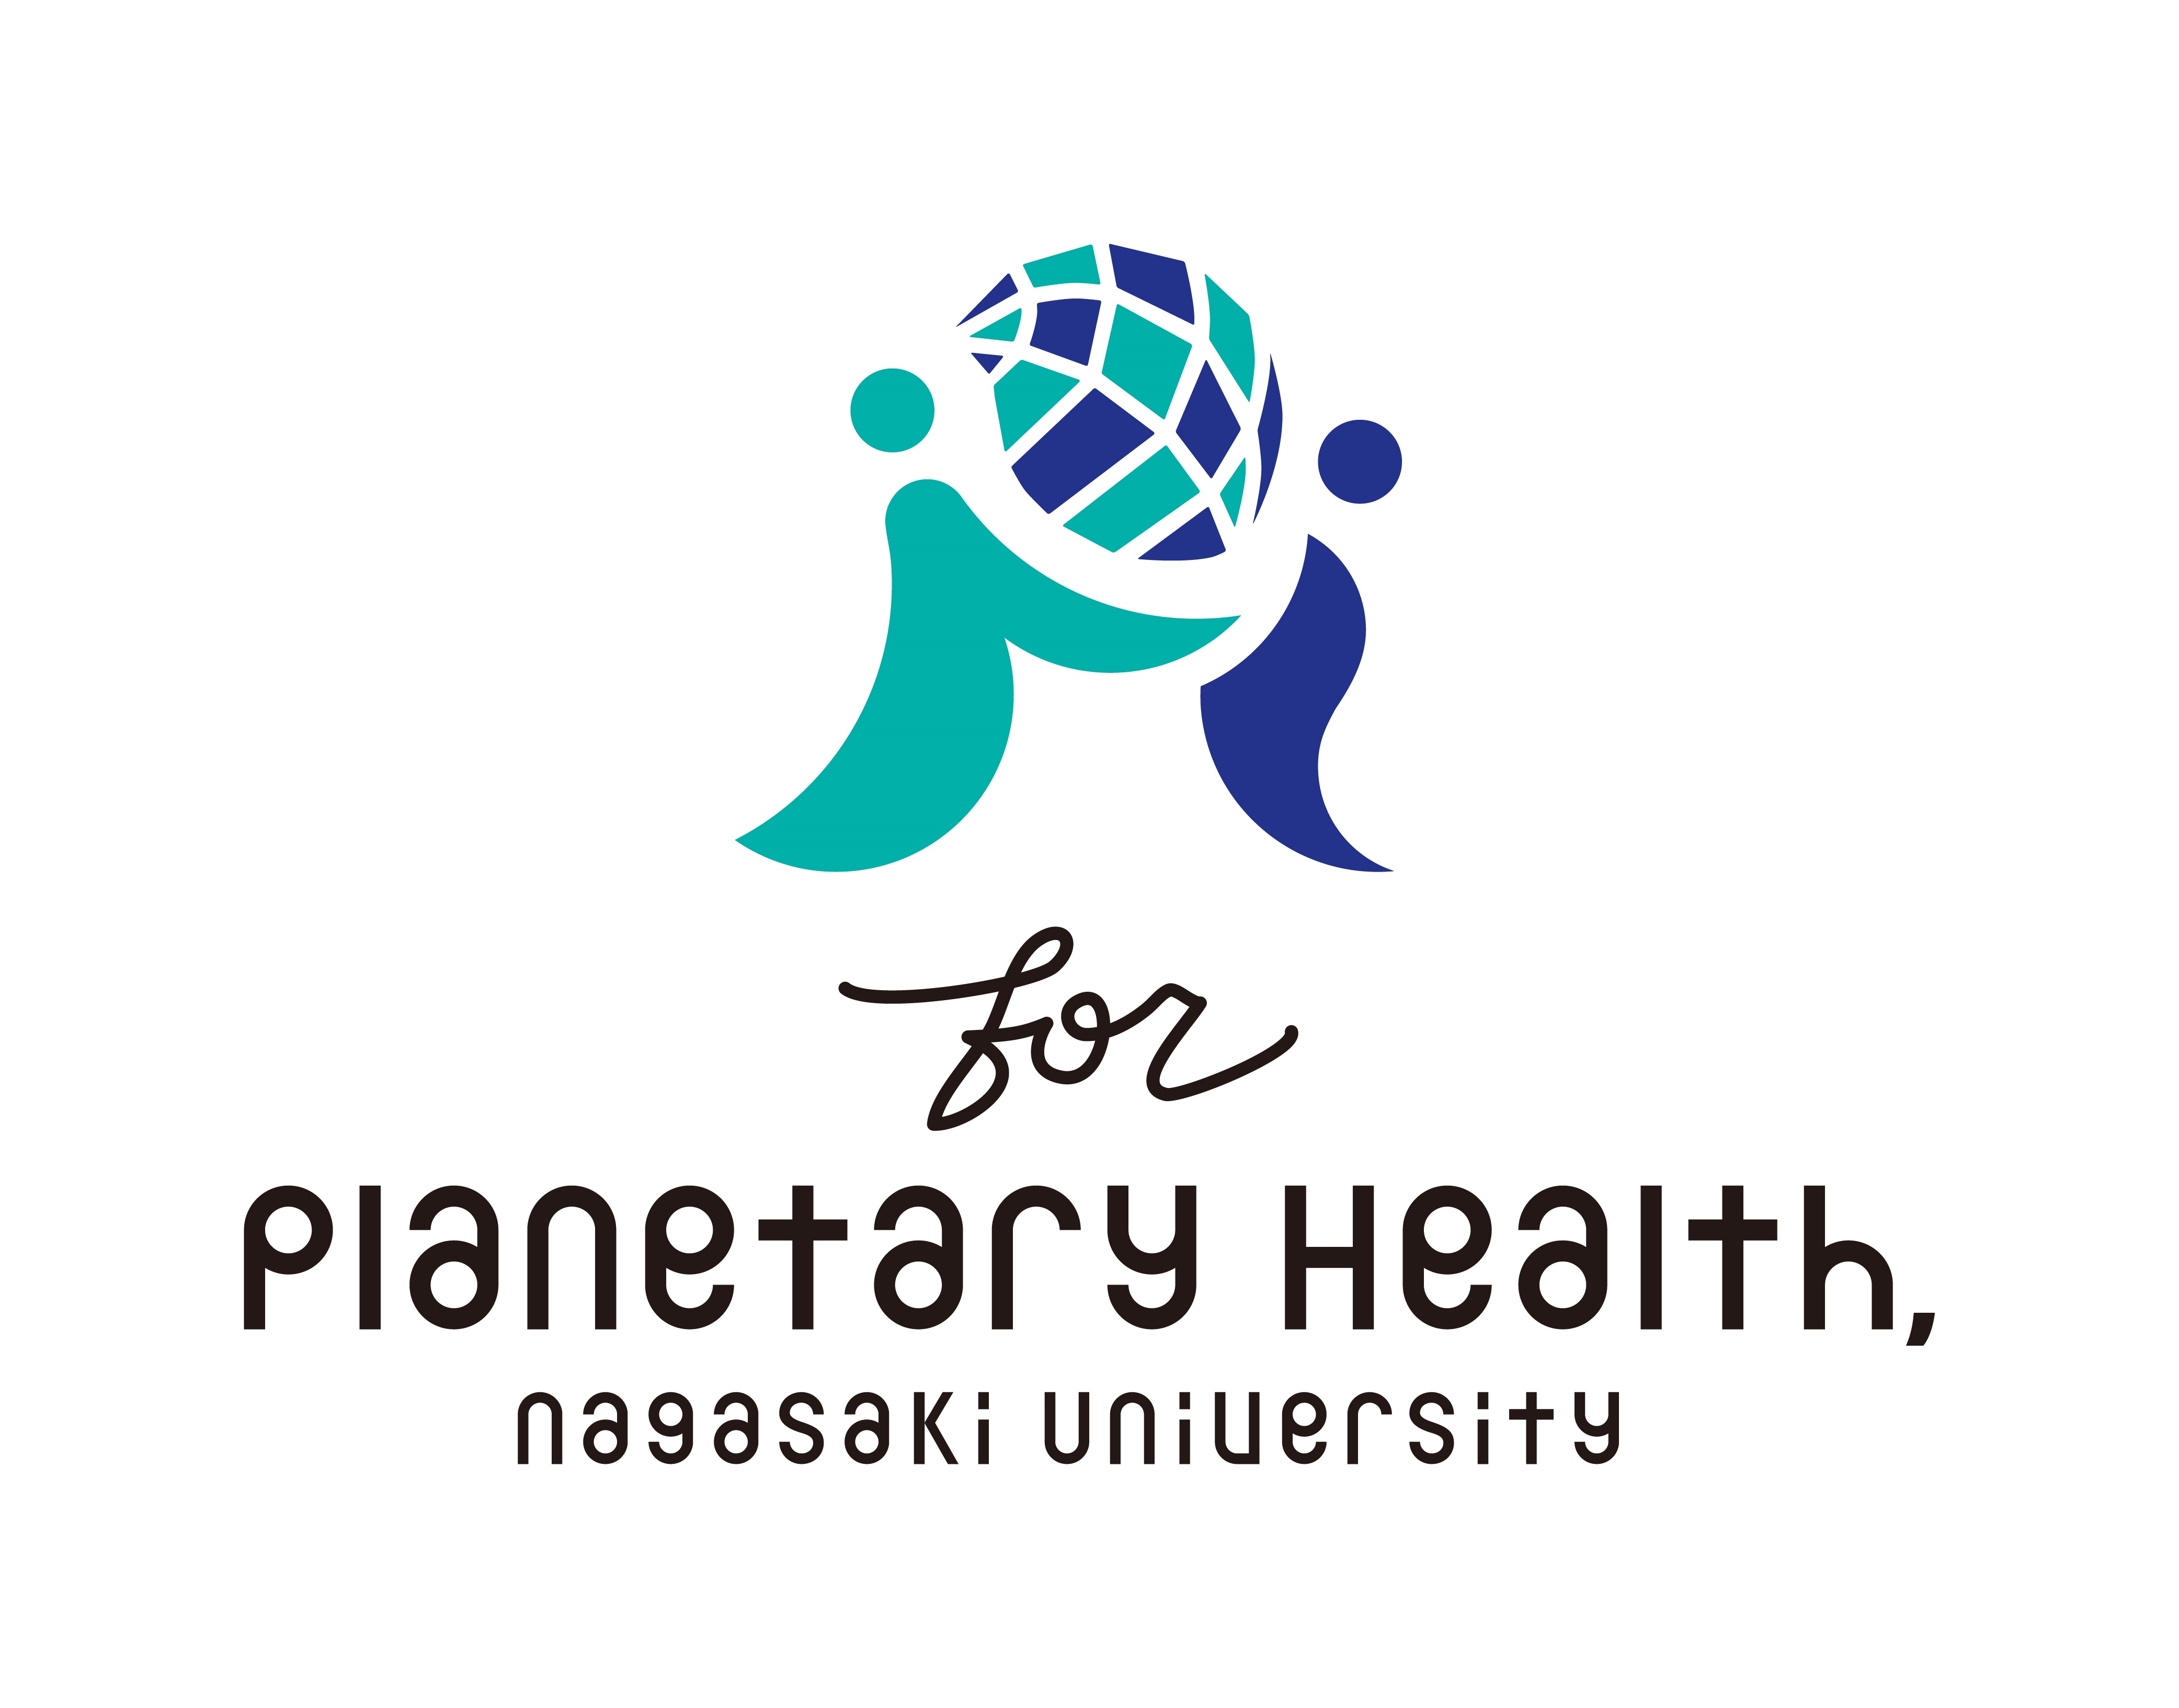 「Planetary Health」のロゴマーク